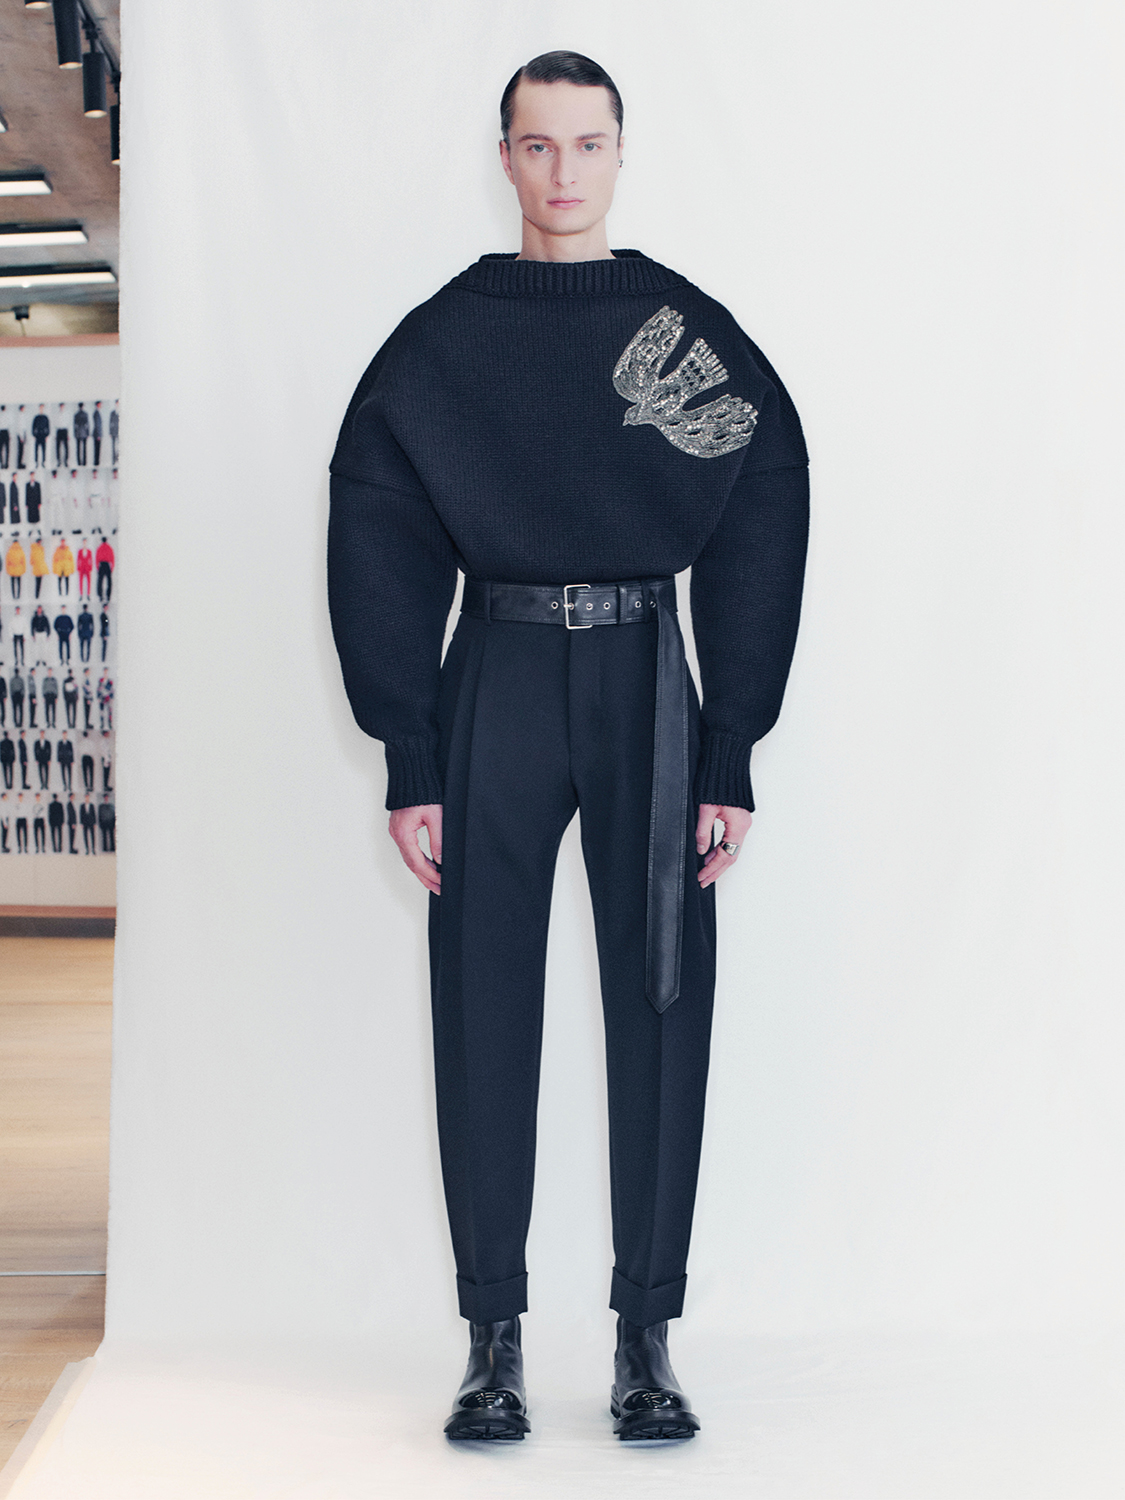 Alexander McQueenの2021年秋冬コレクションが公開